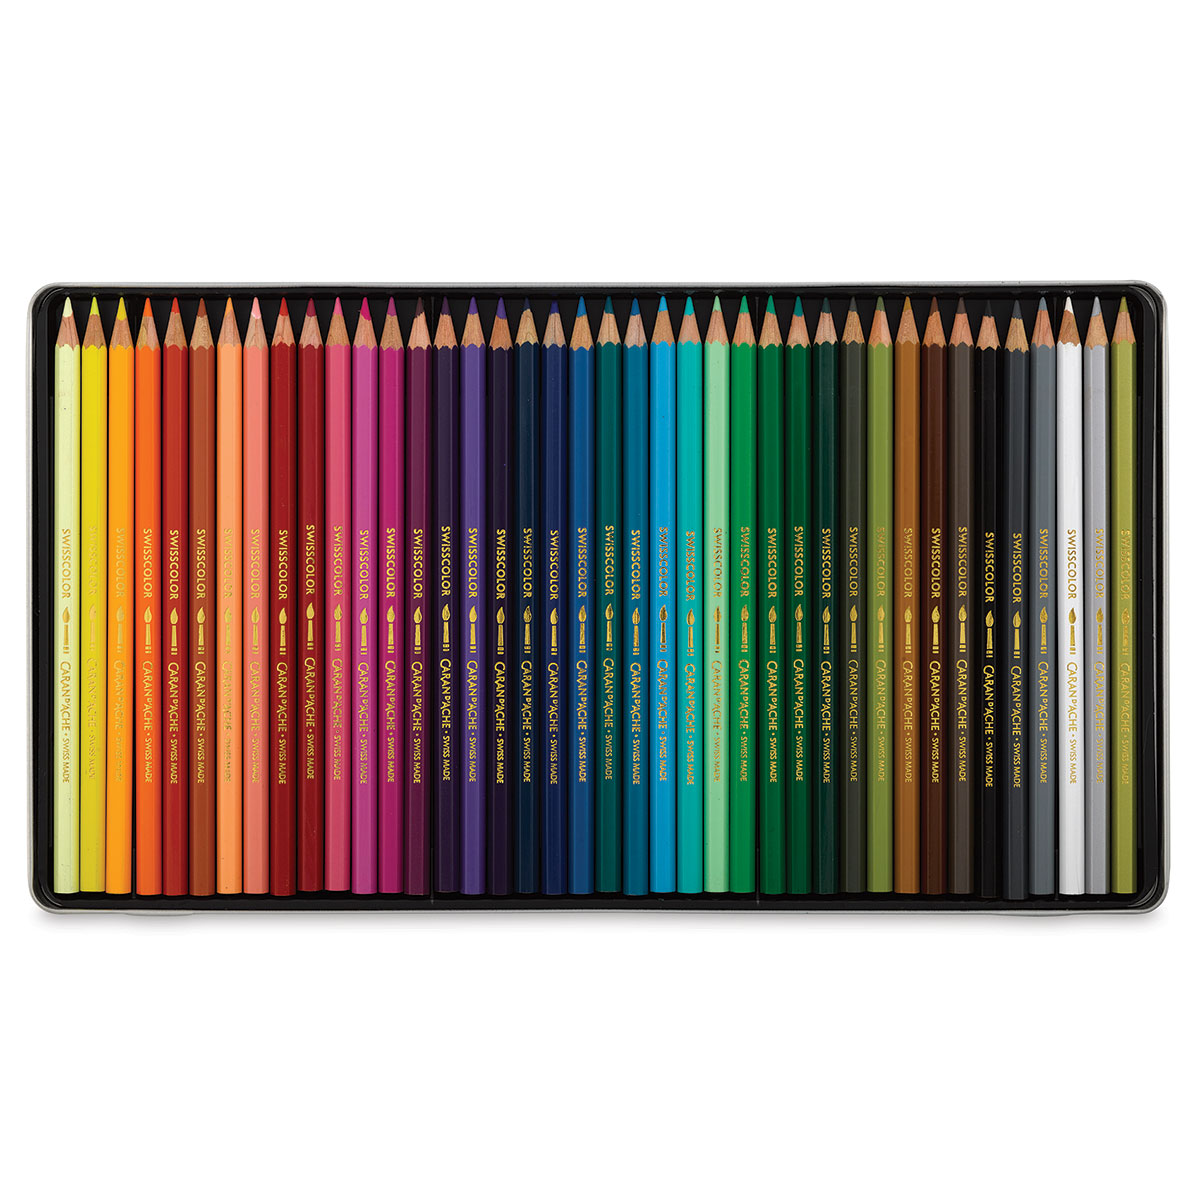 Caran d'Ache Swisscolor Review  Watercolor Pencils — The Art Gear